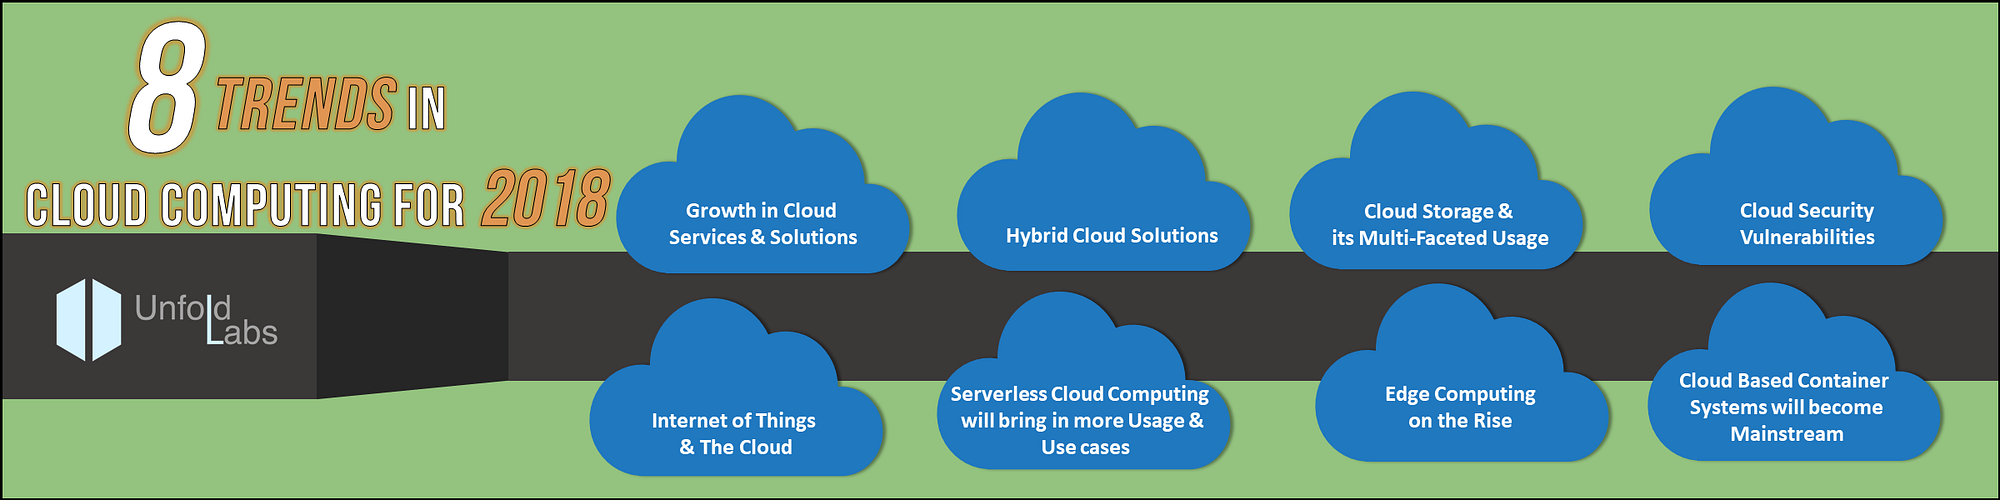 8 Trends in Cloud Computing